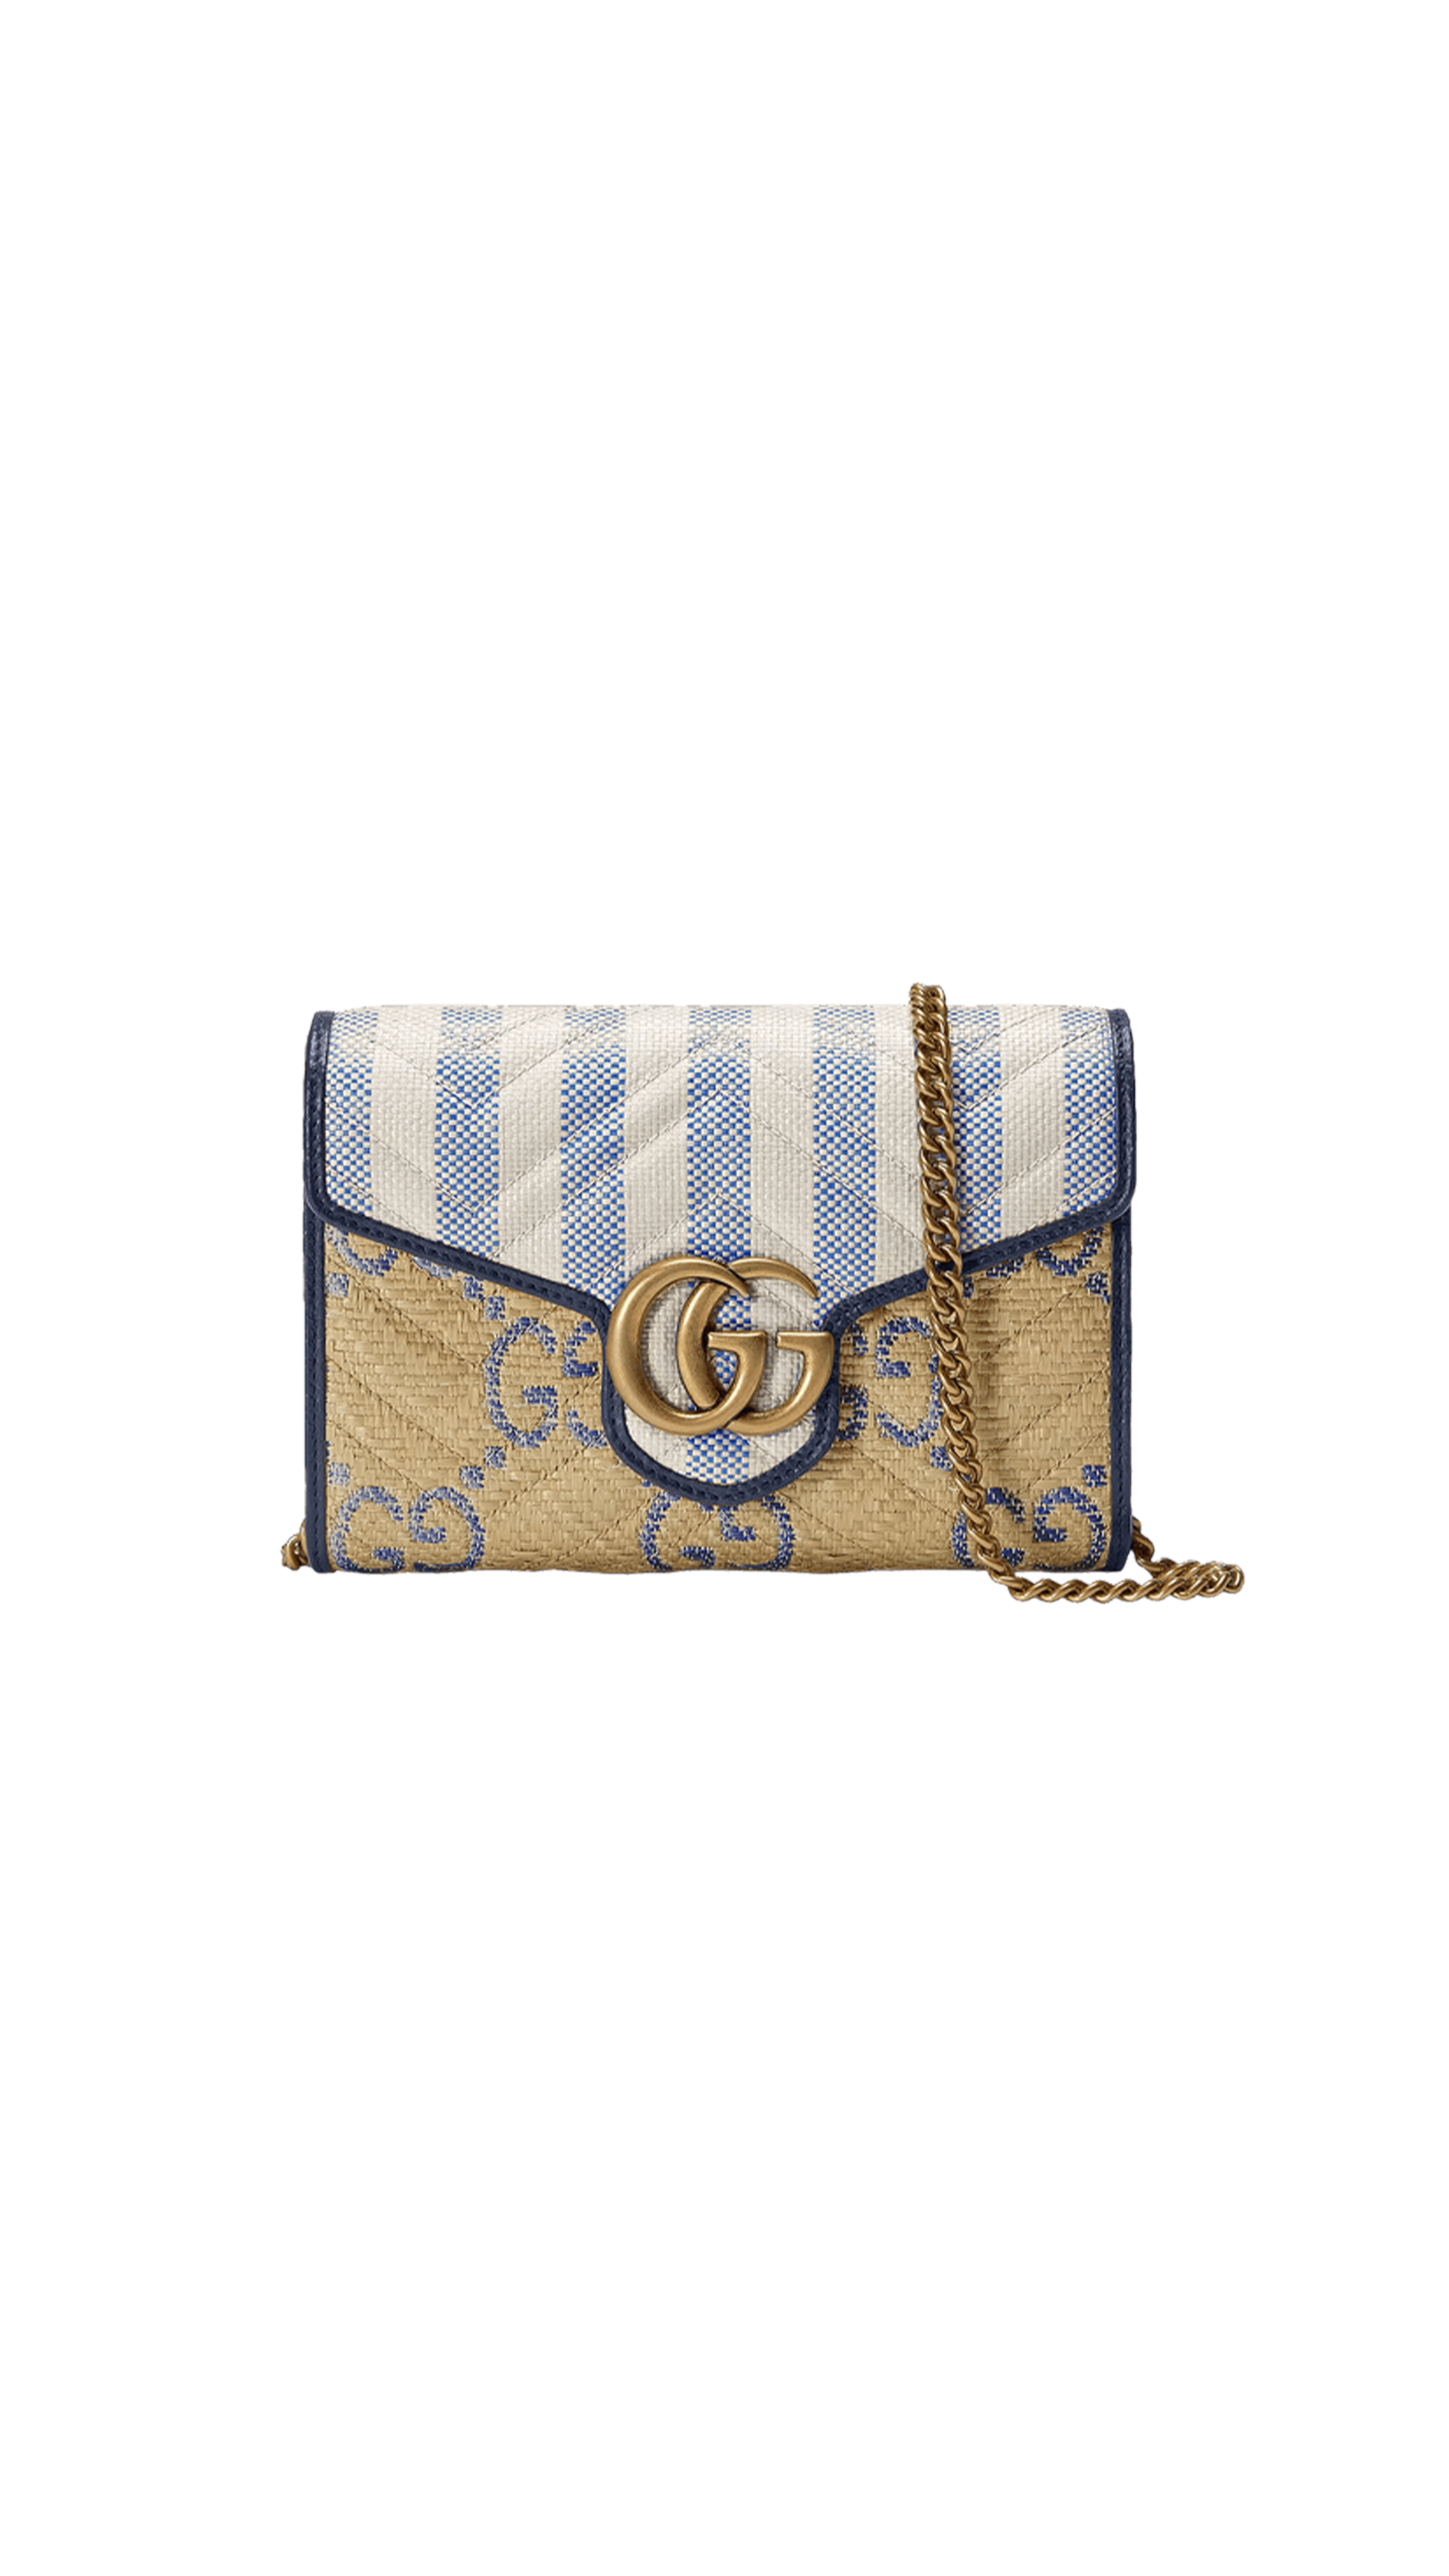 Blue GG Marmont small raffia shoulder bag, Gucci